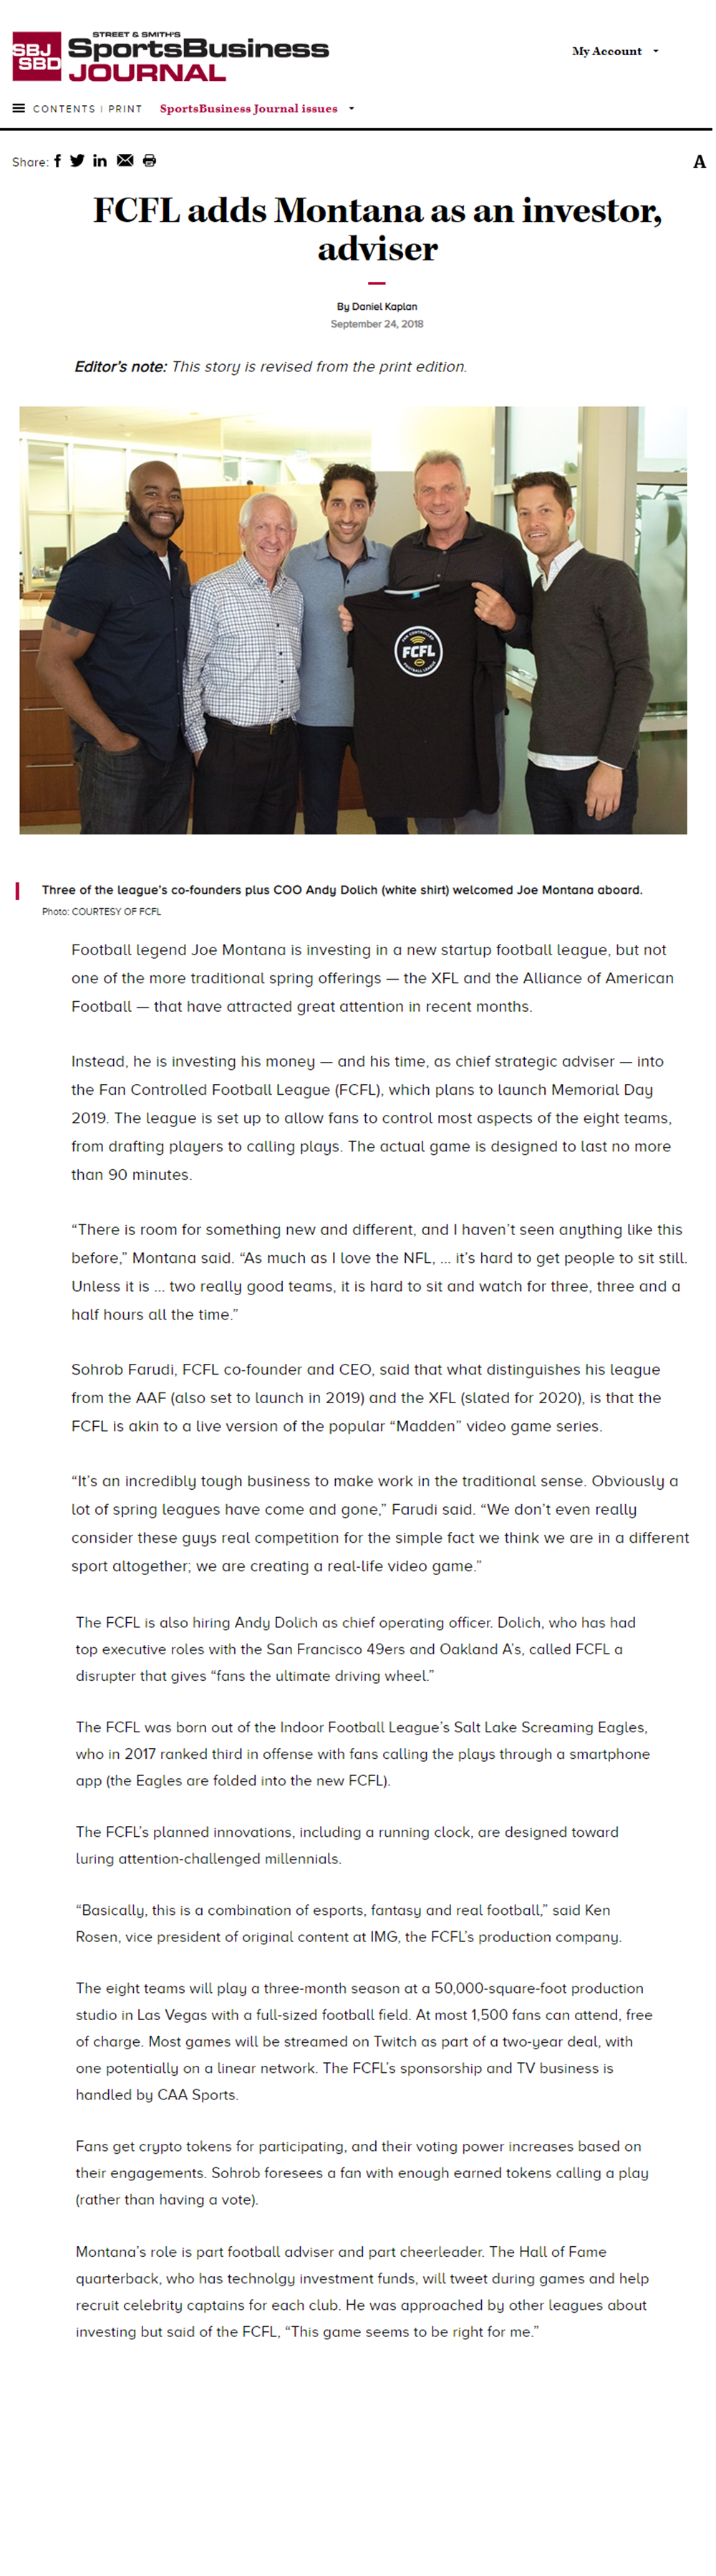 sports business journal - Fan Controlled Football League